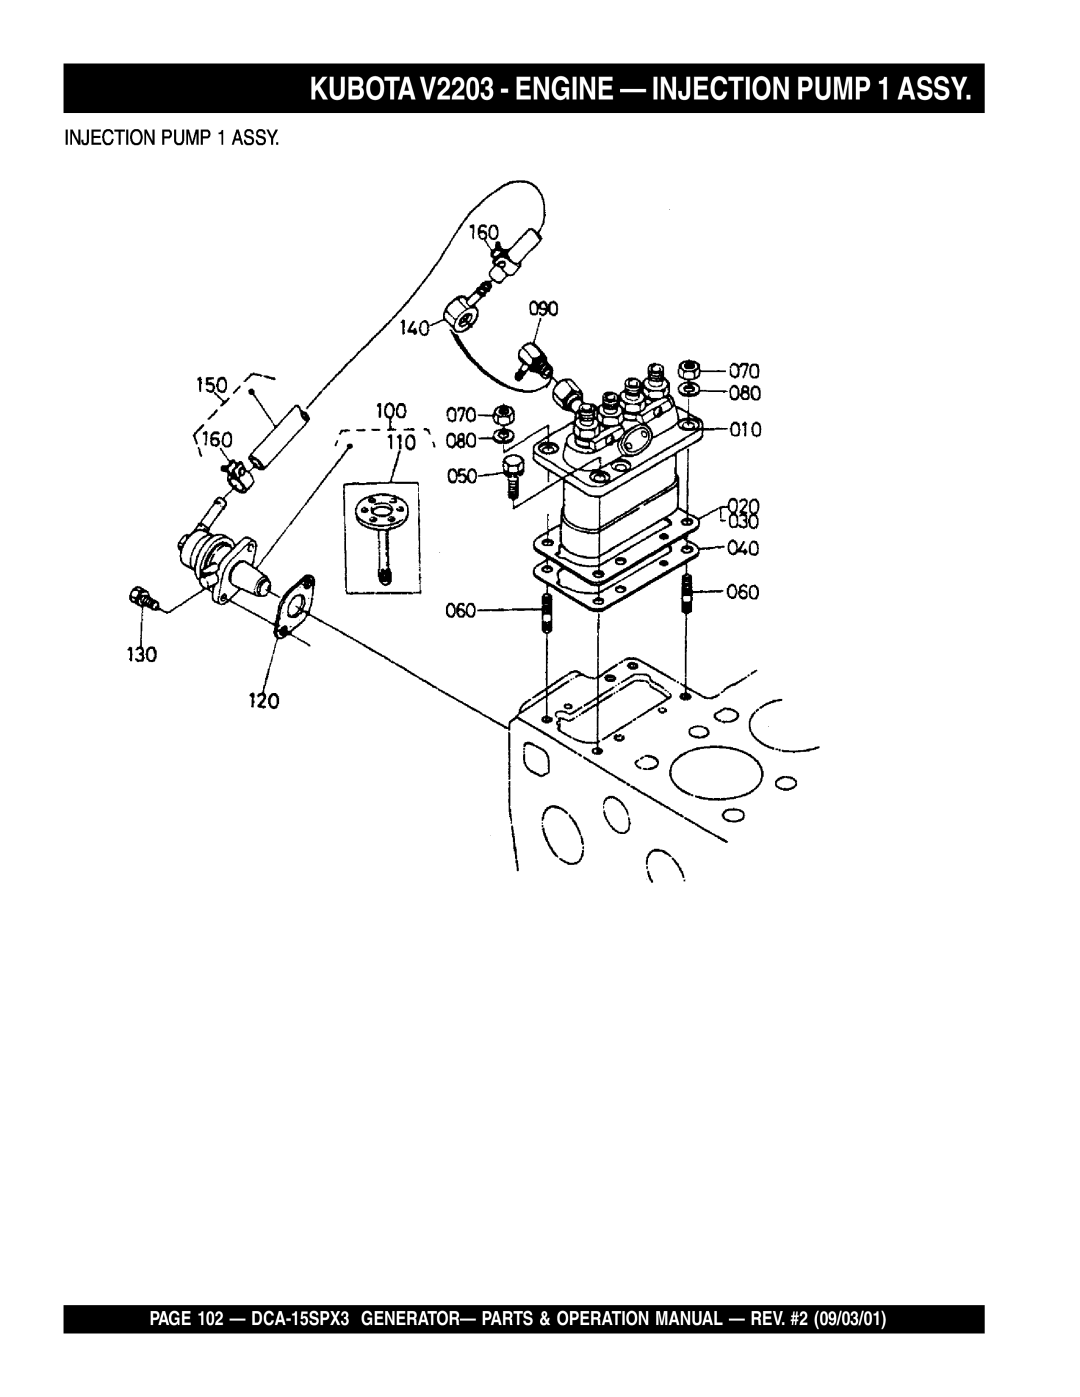 Multiquip DCA-15SPX3 operation manual KUBOTA V2203 - ENGINE — INJECTION PUMP 1 ASSY 